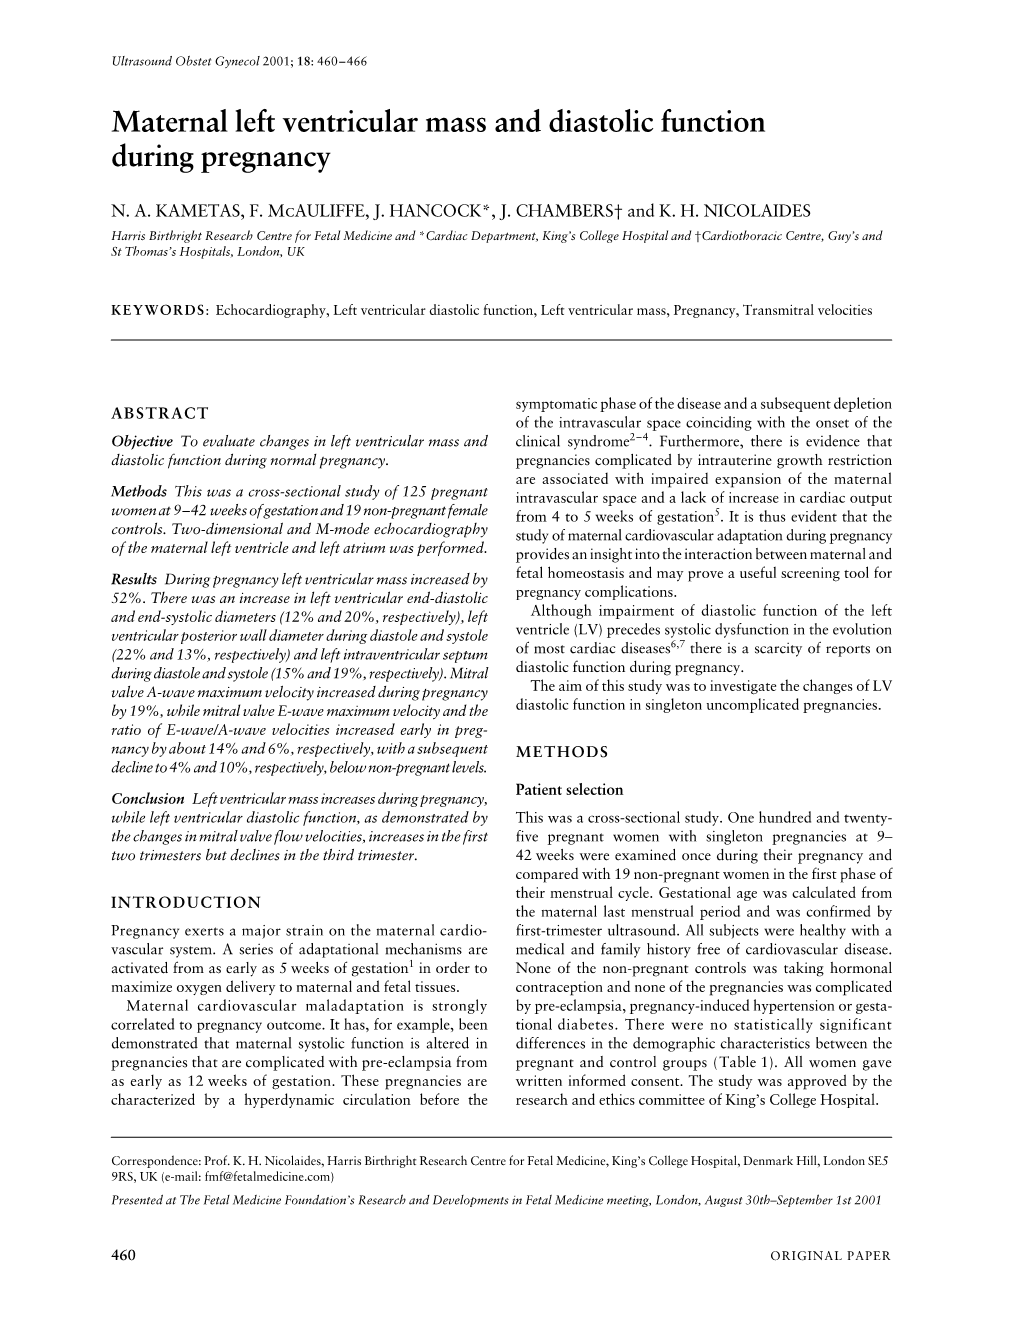 Maternal Left Ventricular Mass and Diastolic Function During Pregnancy Kametas Et Al